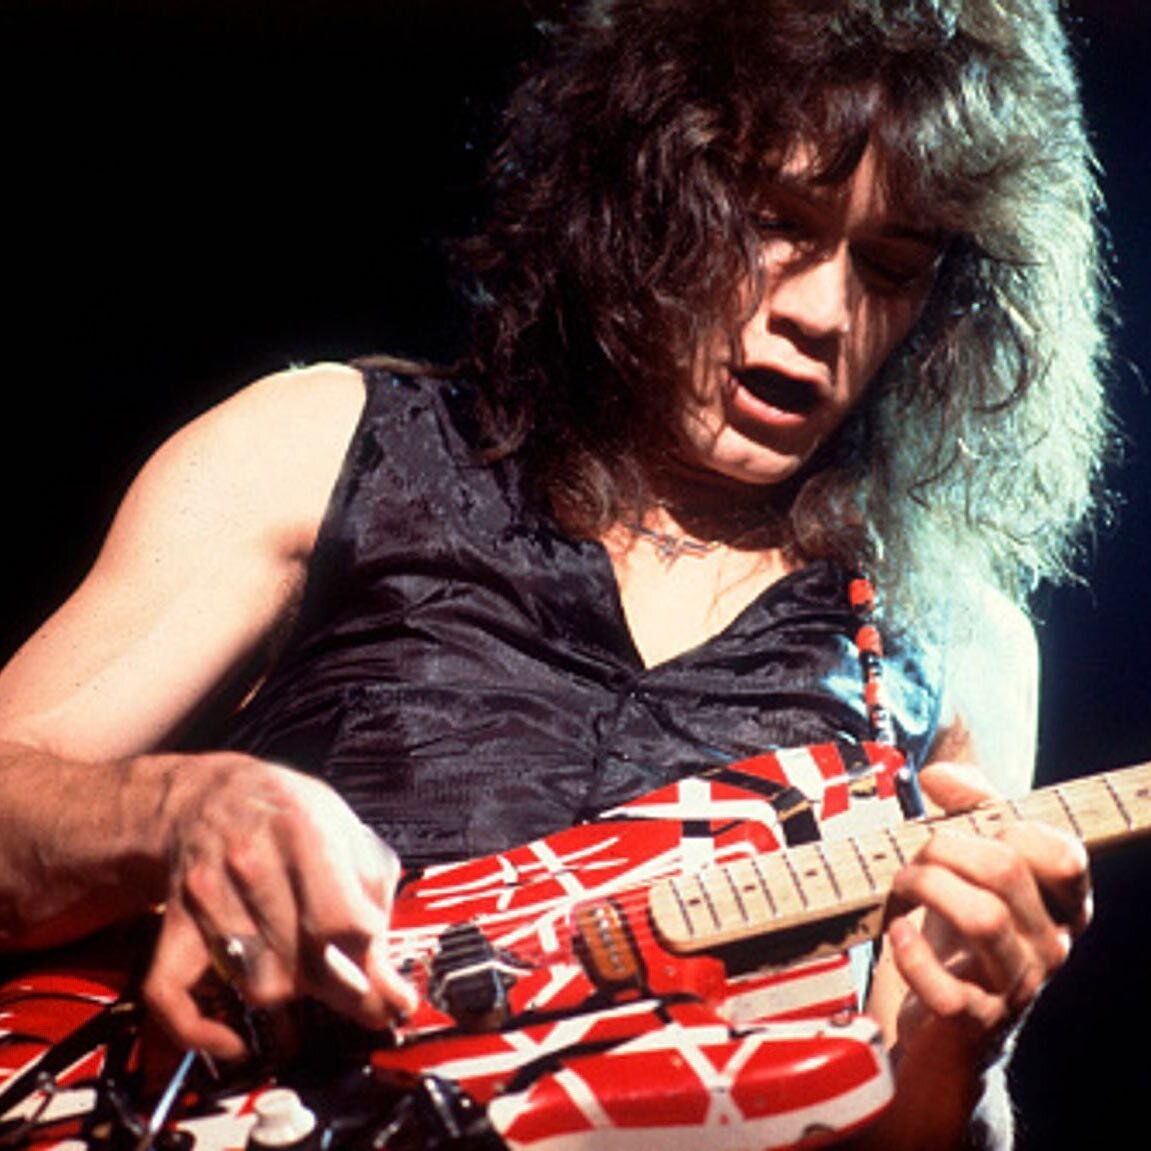 Eddie Van Halen - Rest In Peace. Our condolences to the Van Halen family.